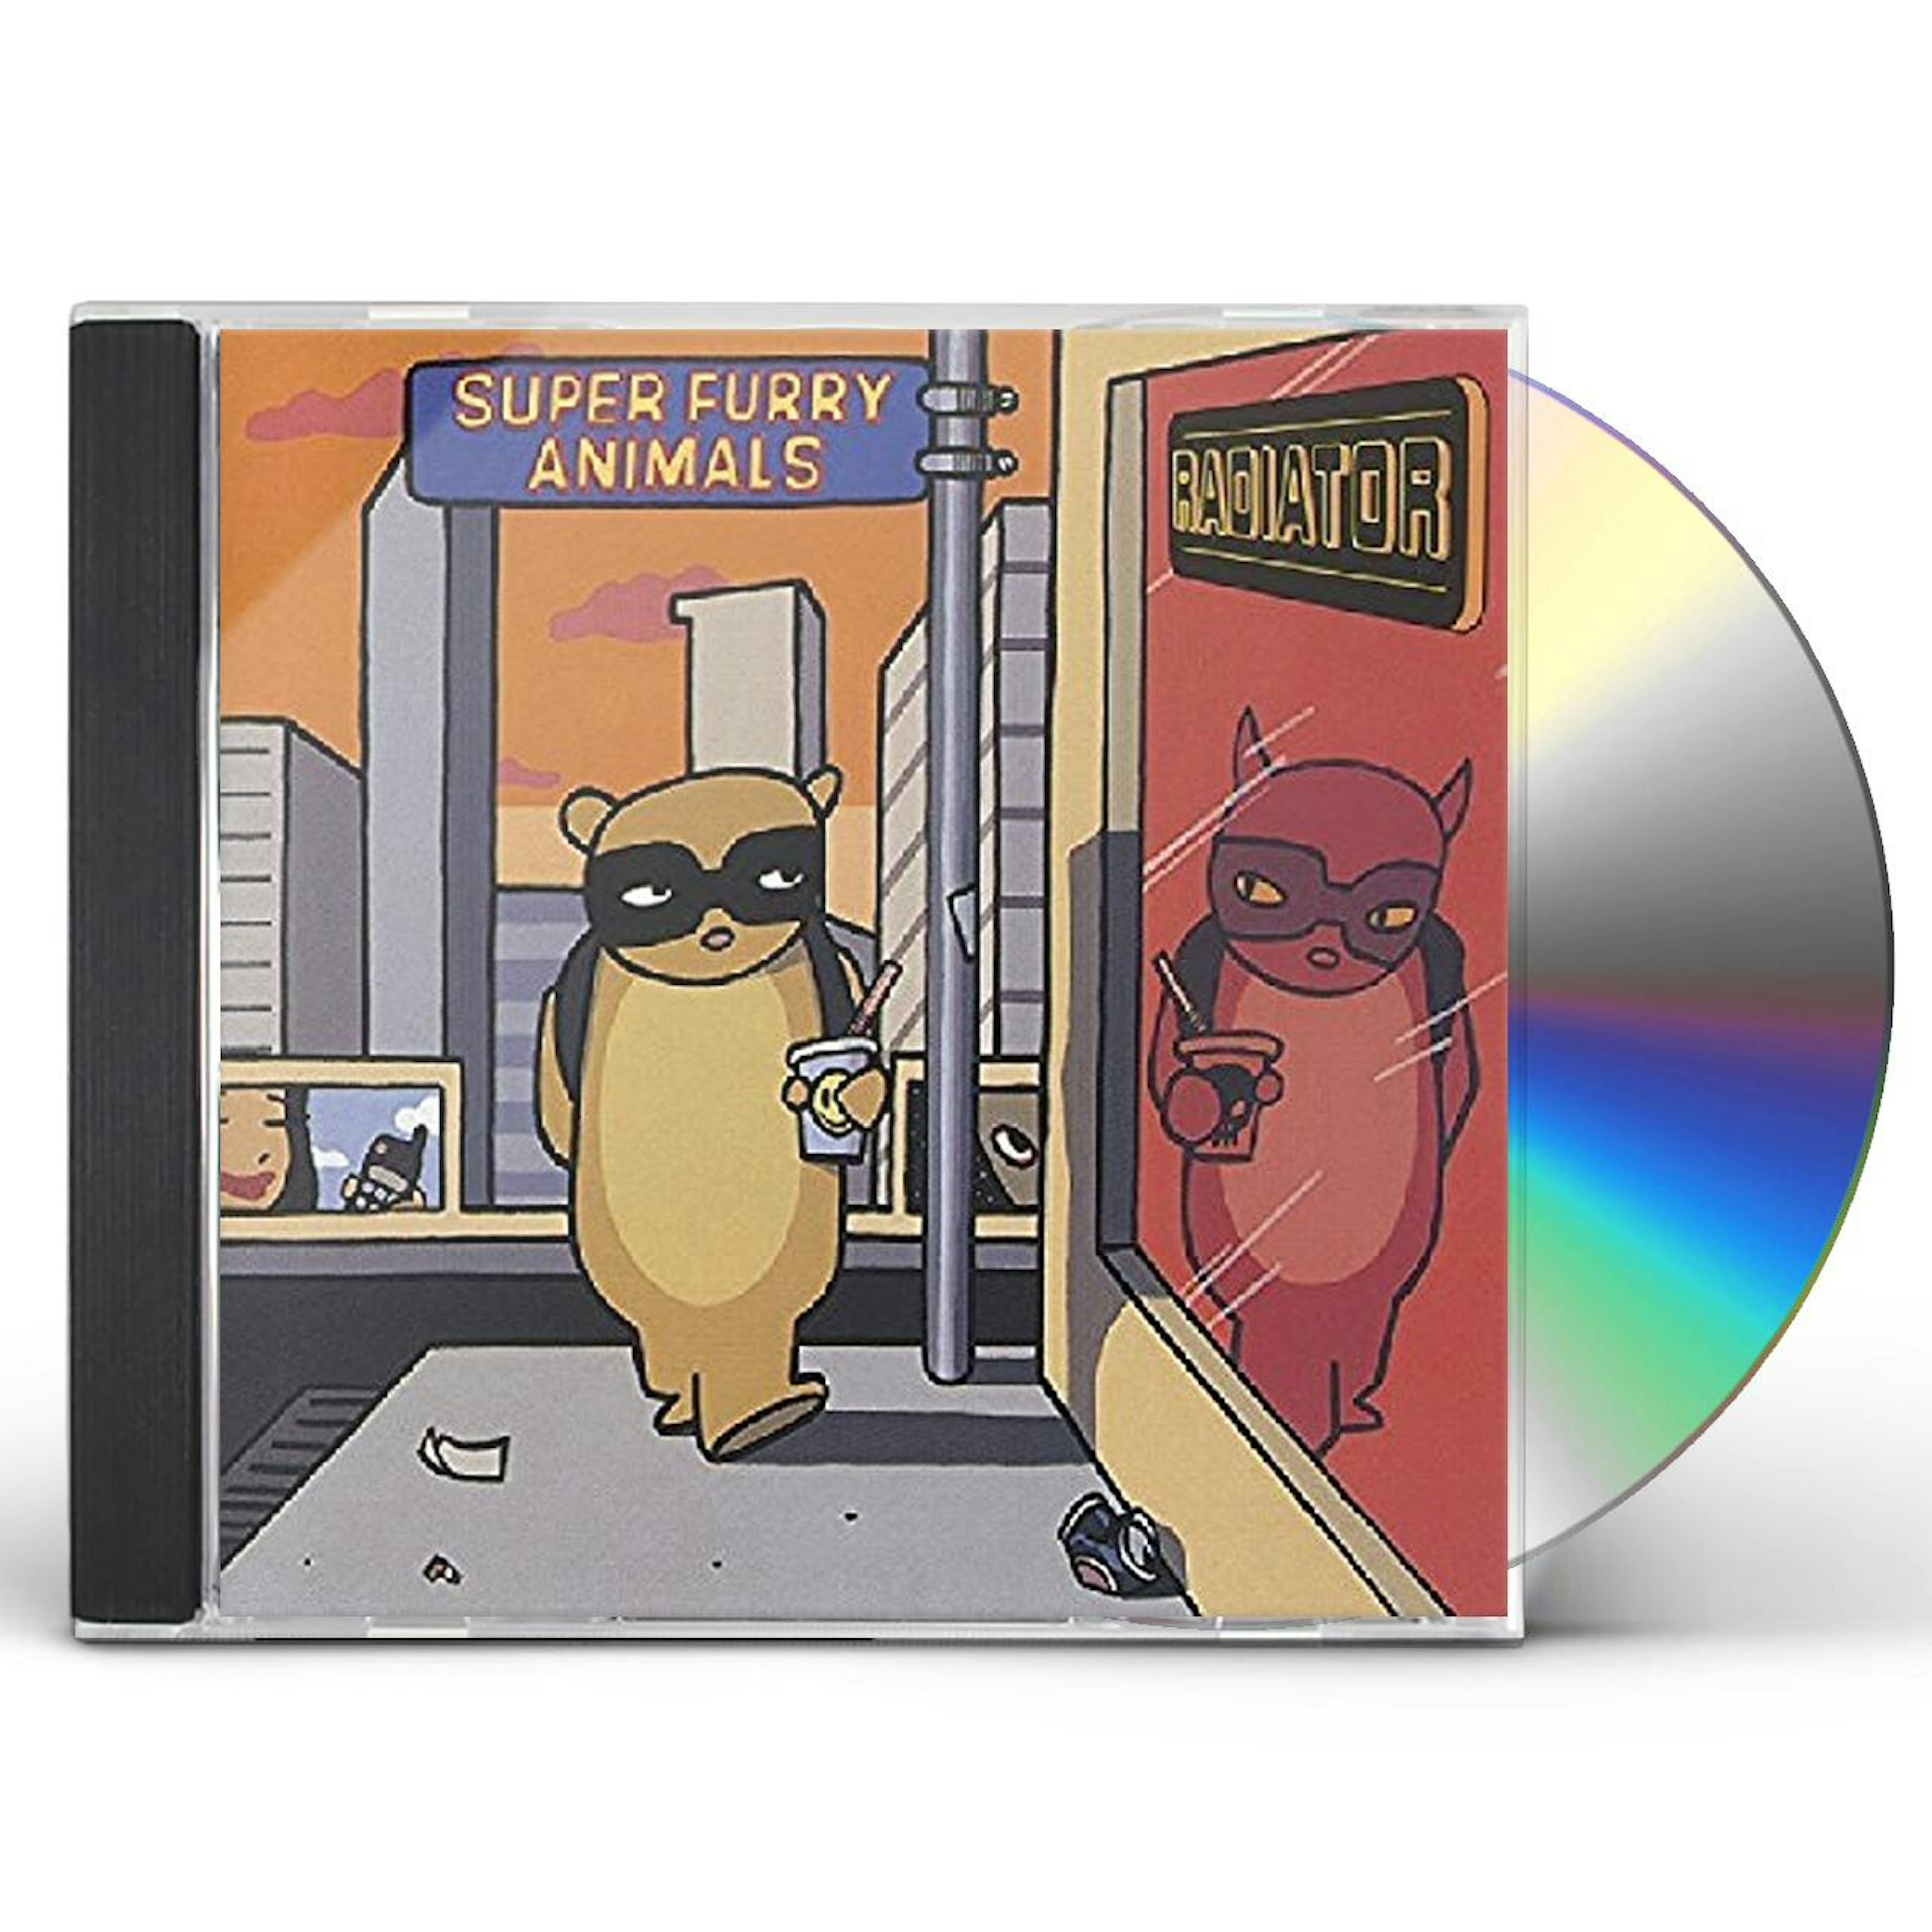 Super Furry Animals RADIATOR CD